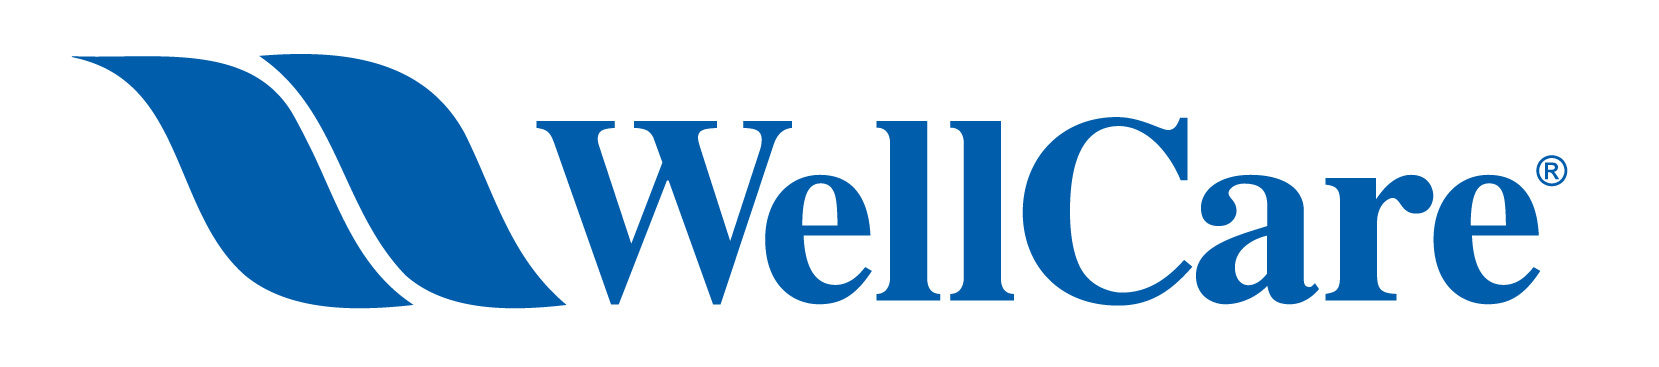 WellCare Logo photo - 1